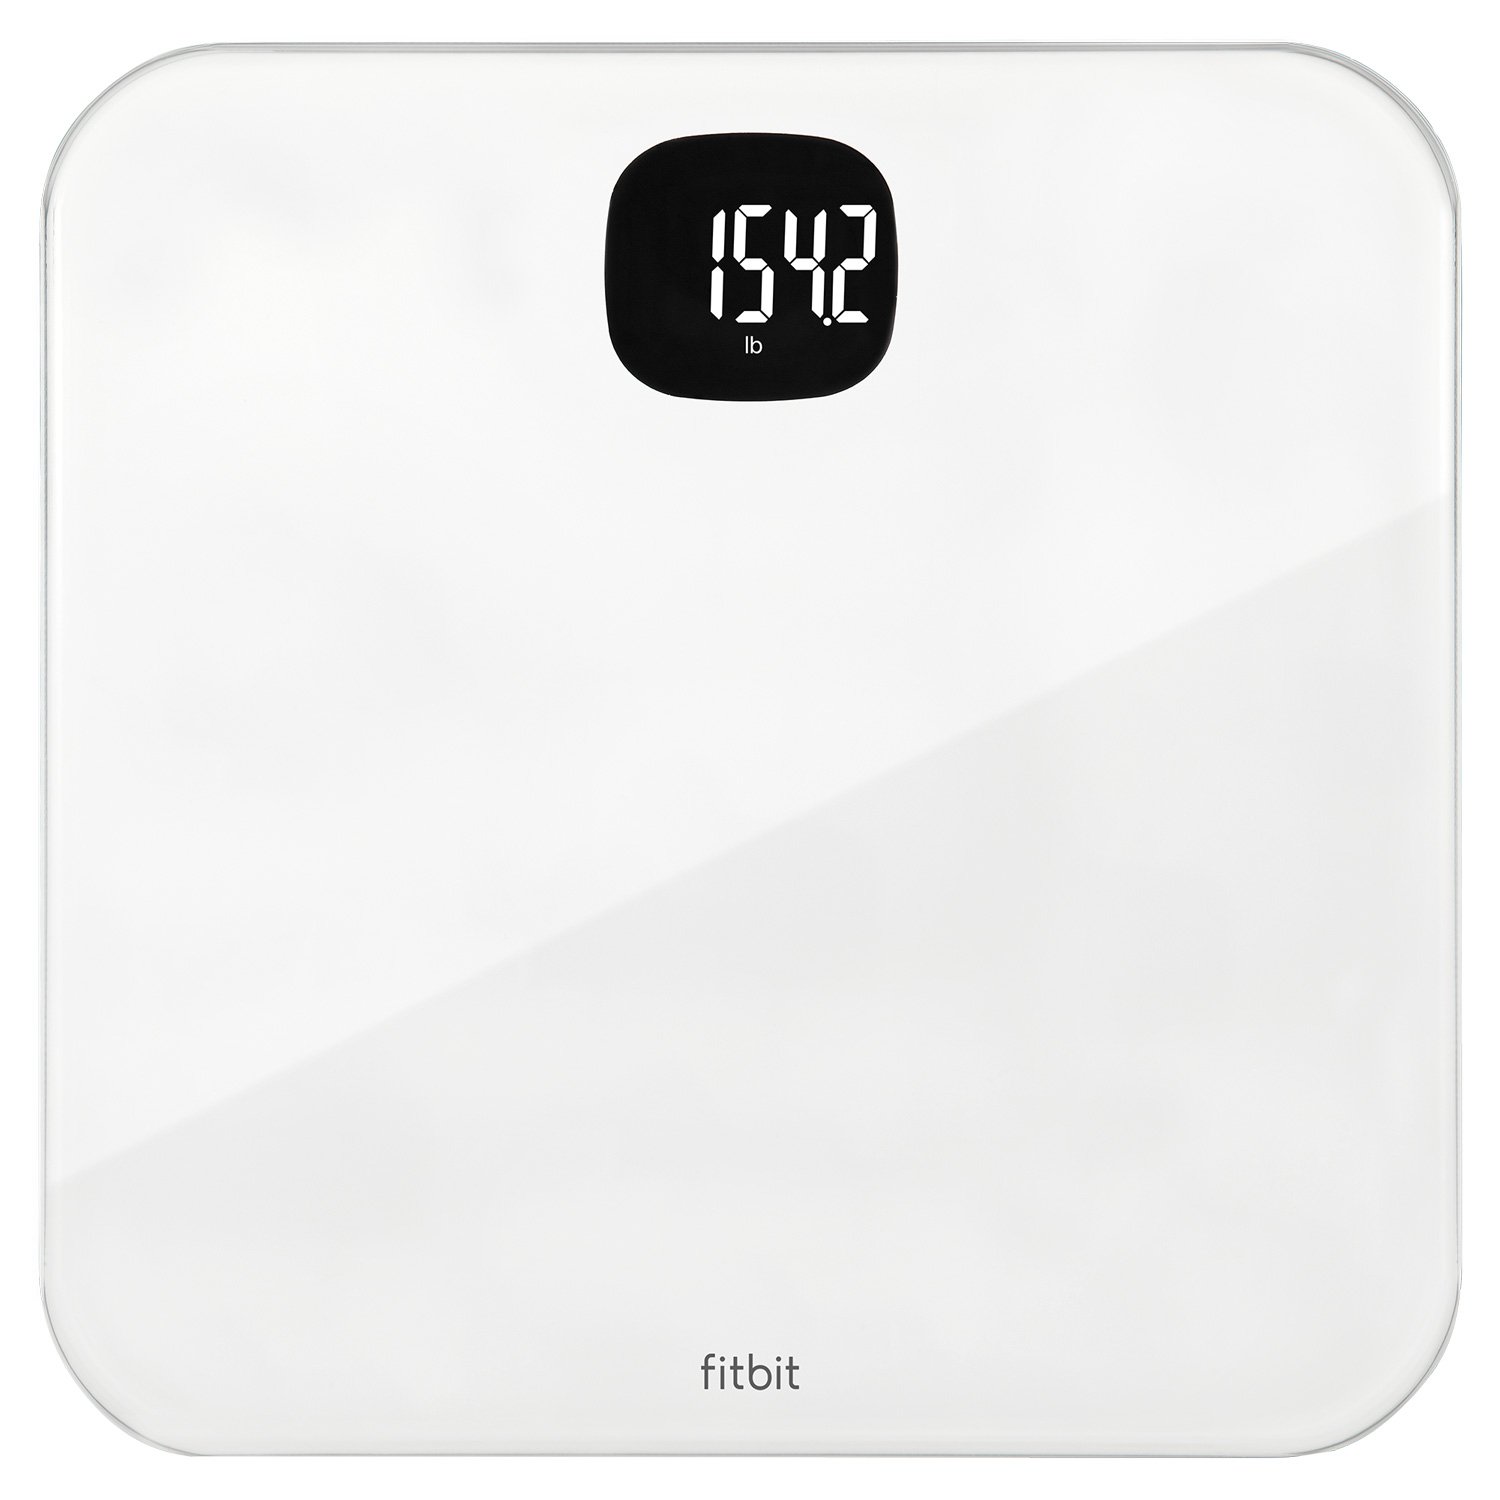 fitbit smart scale